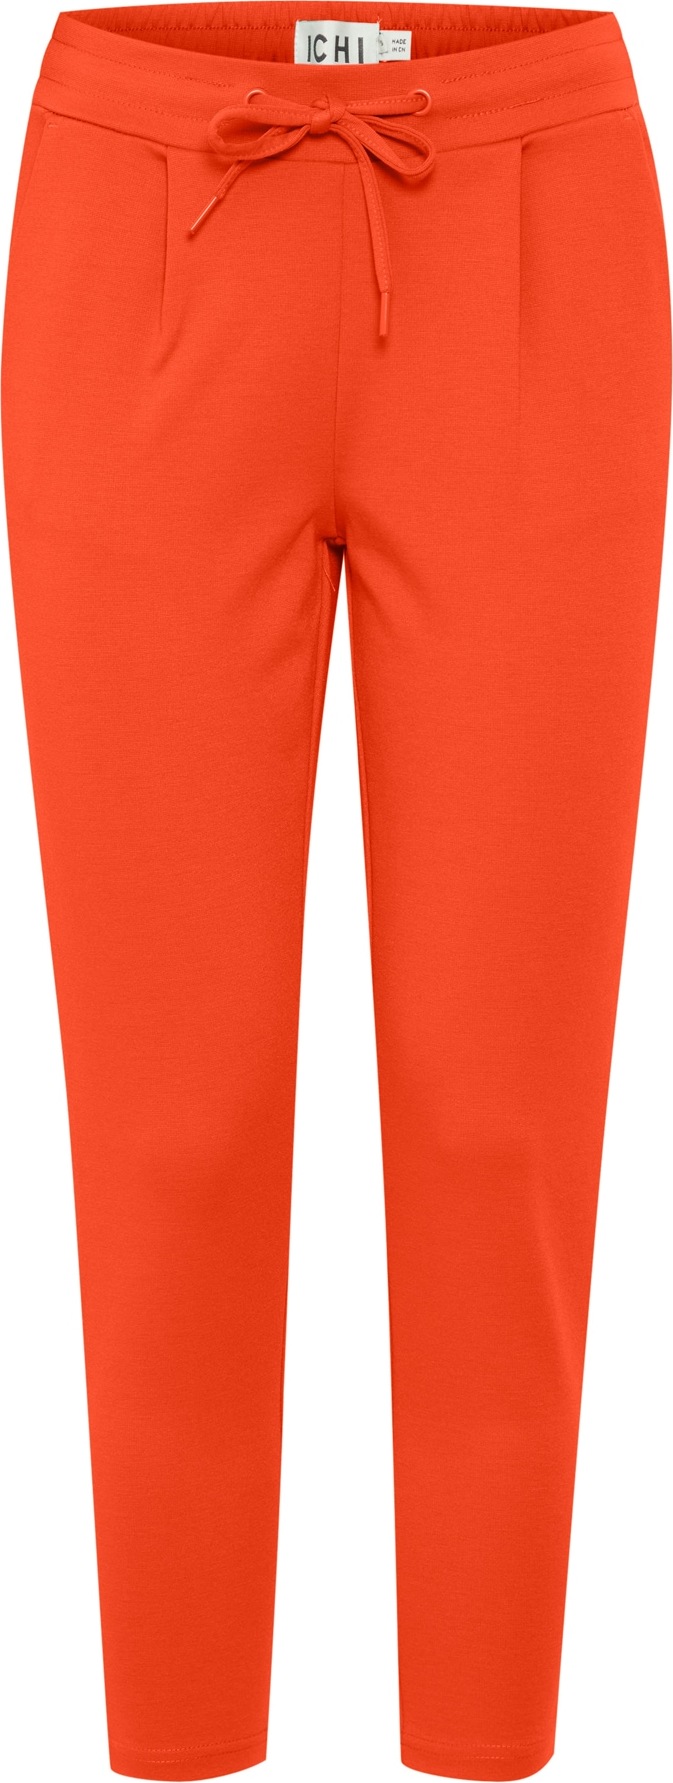 Kalhoty 'KATE' Ichi oranžová